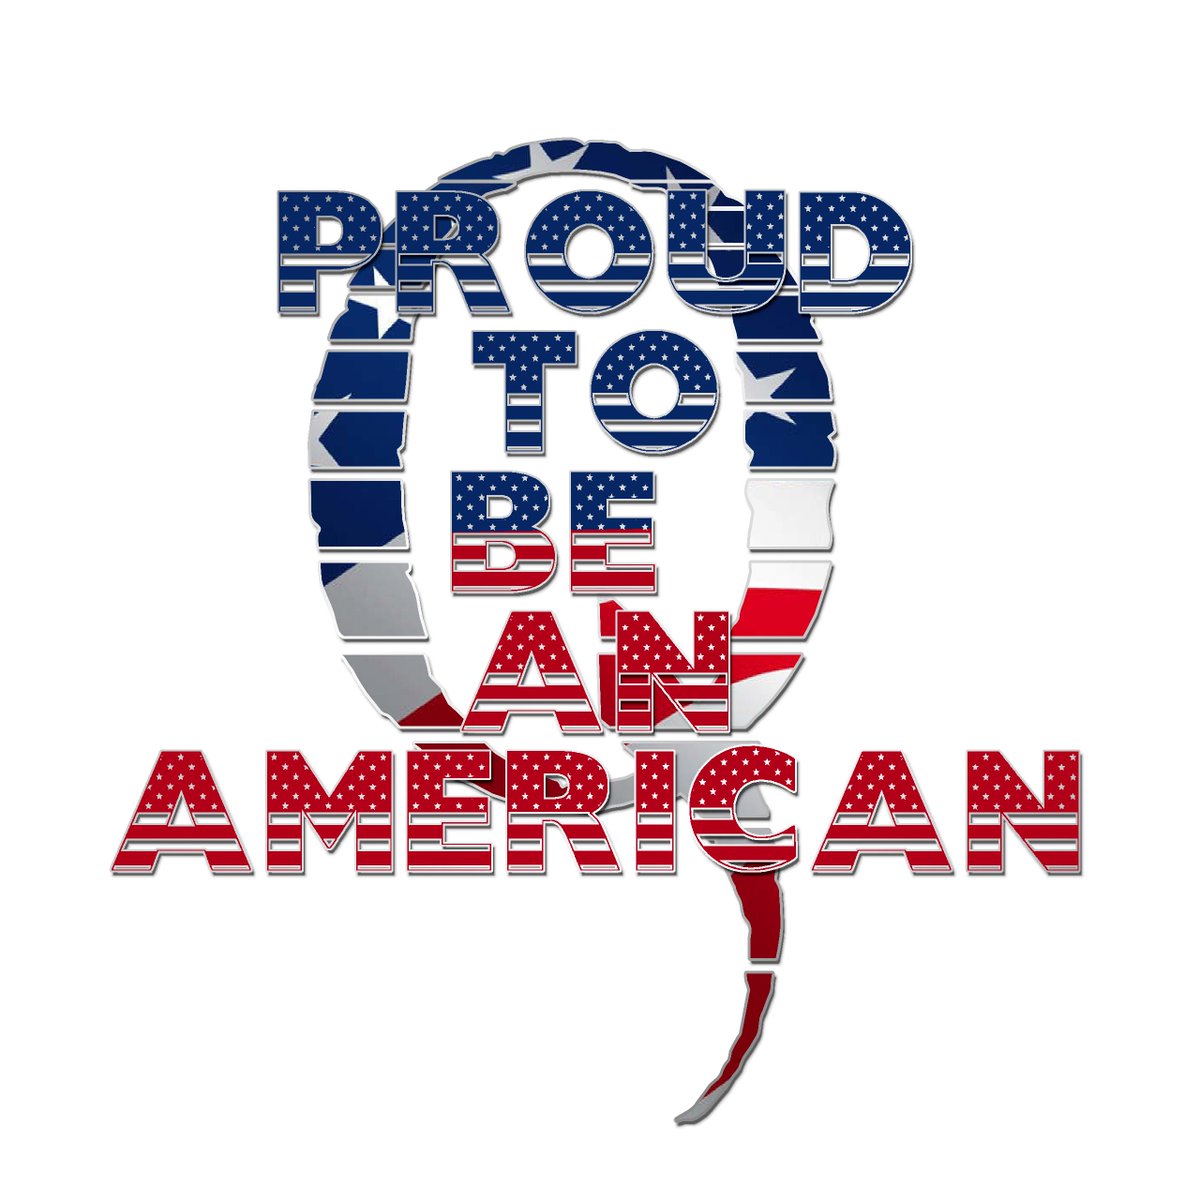 ... Proud To Be An American Q, POW-MIA Q, Nautilus shell Q, black chef's hat Q ...